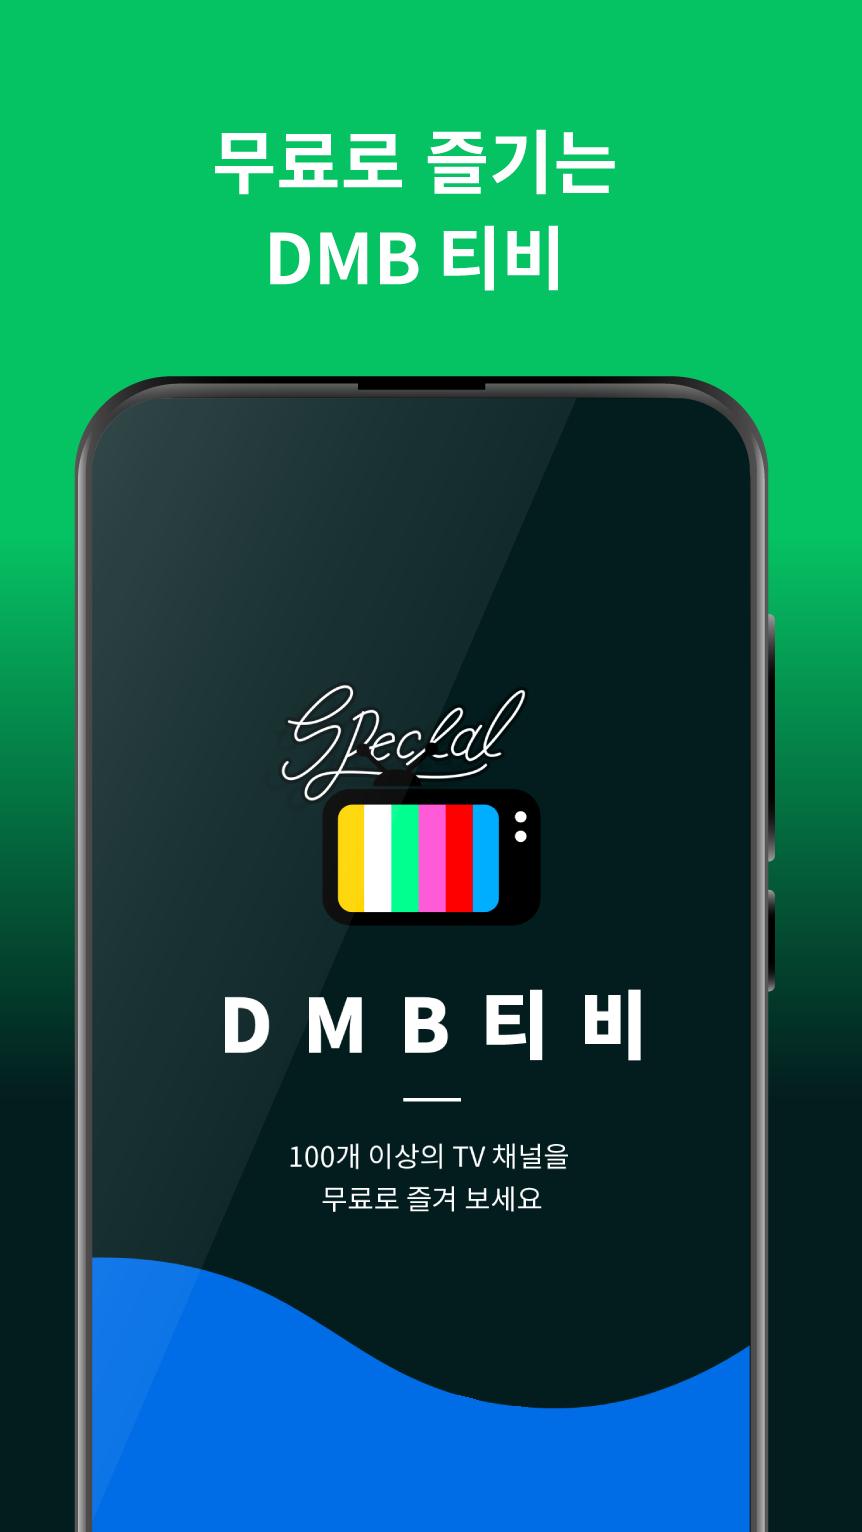 DMB TV 실시간무료TV, 실시간TV 방송, 지상파, 디엠비 방송시청, 모바일 무료티비 1.0.1 Screenshot 11